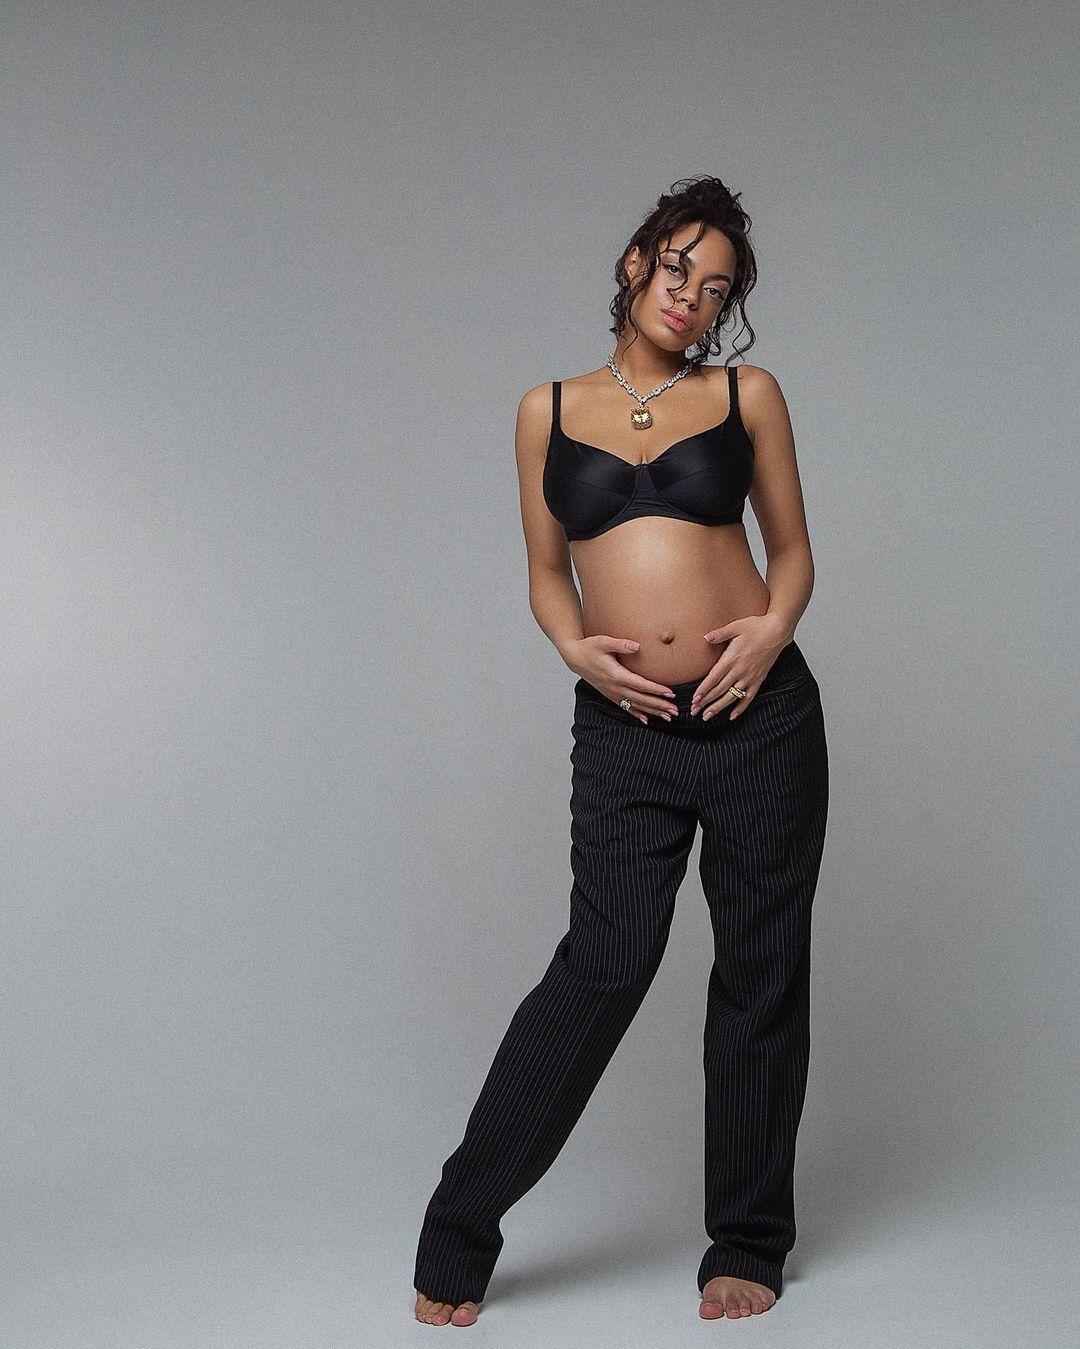 Аделіна Делі вагітна / instagram.com/photo_reva_